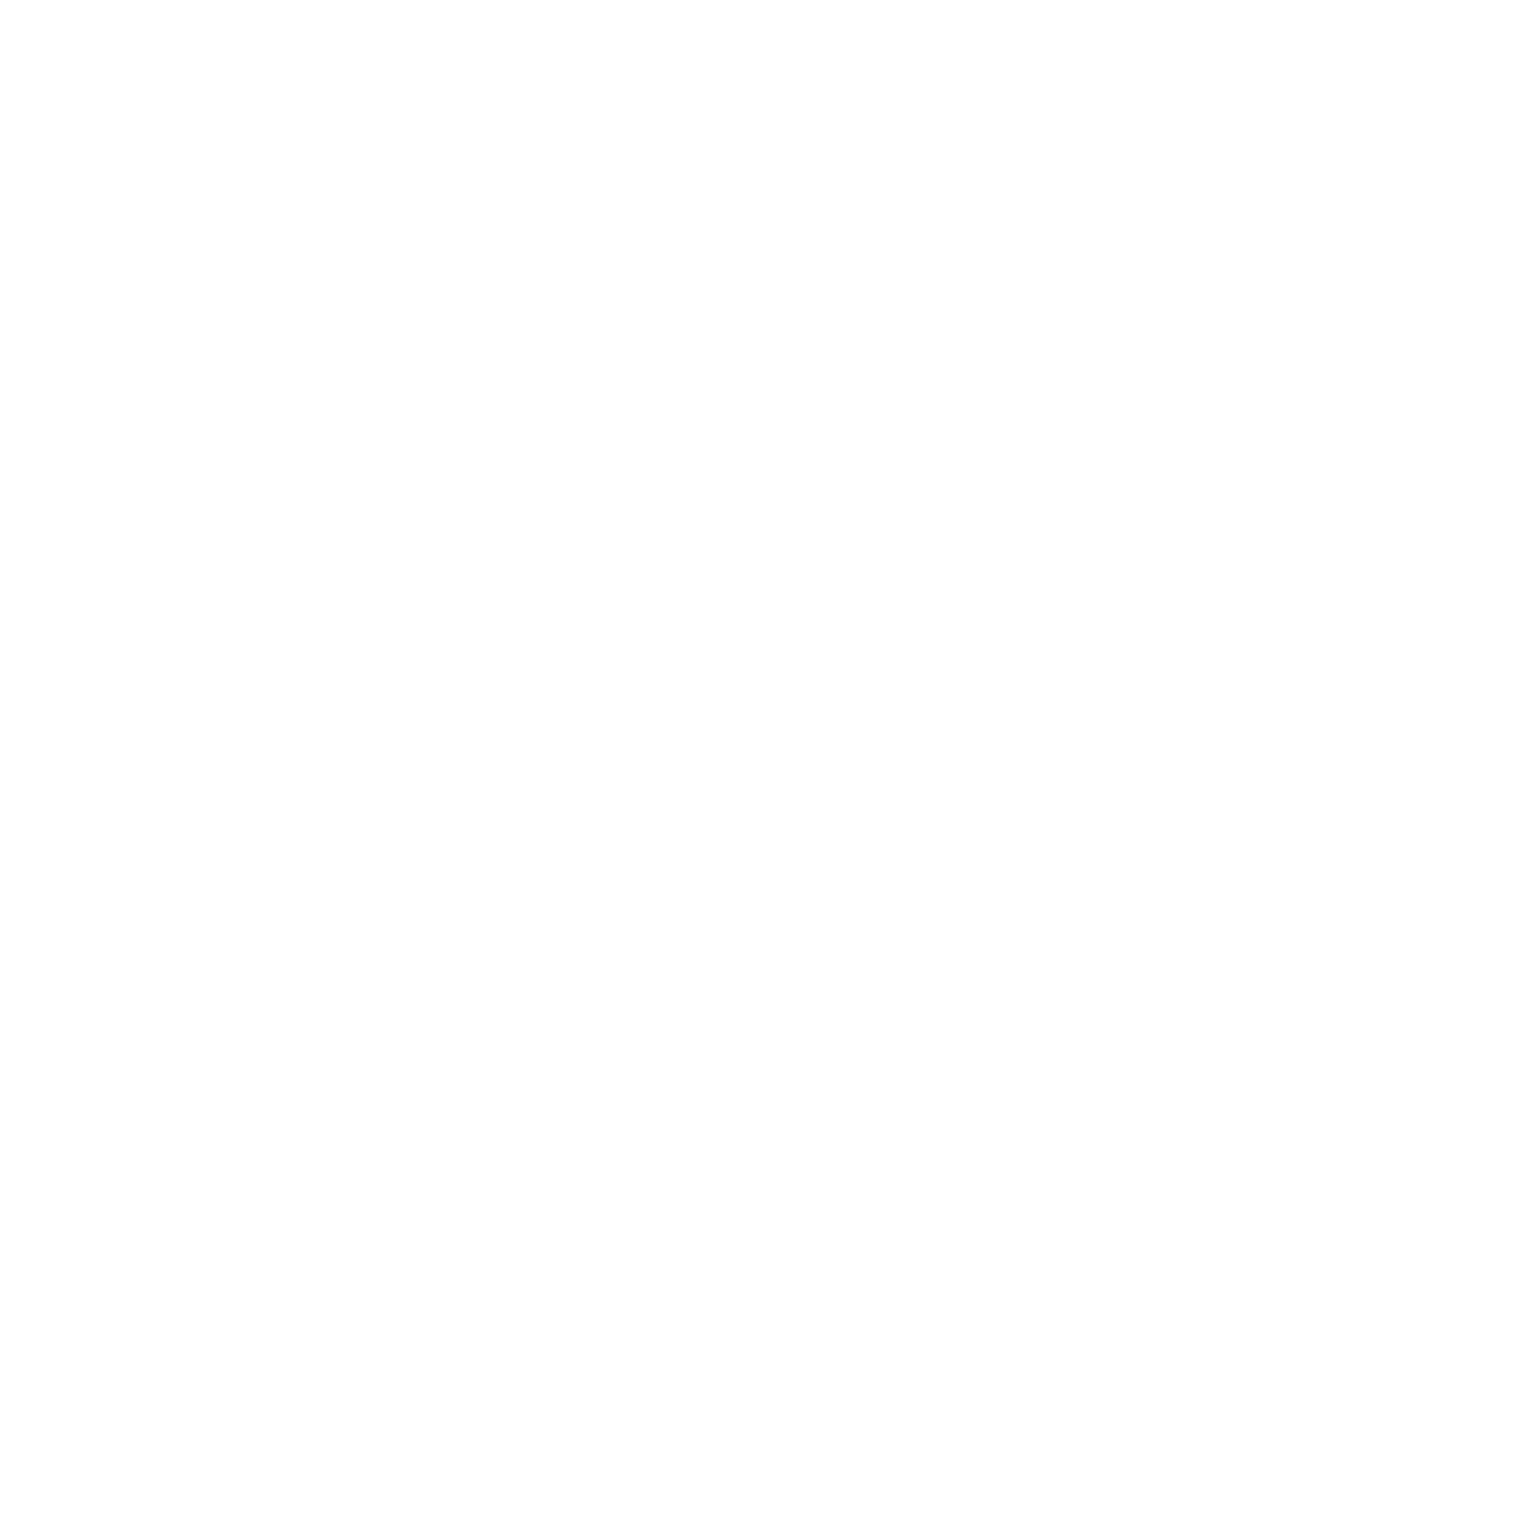 Yext logo large for dark backgrounds (transparent PNG)